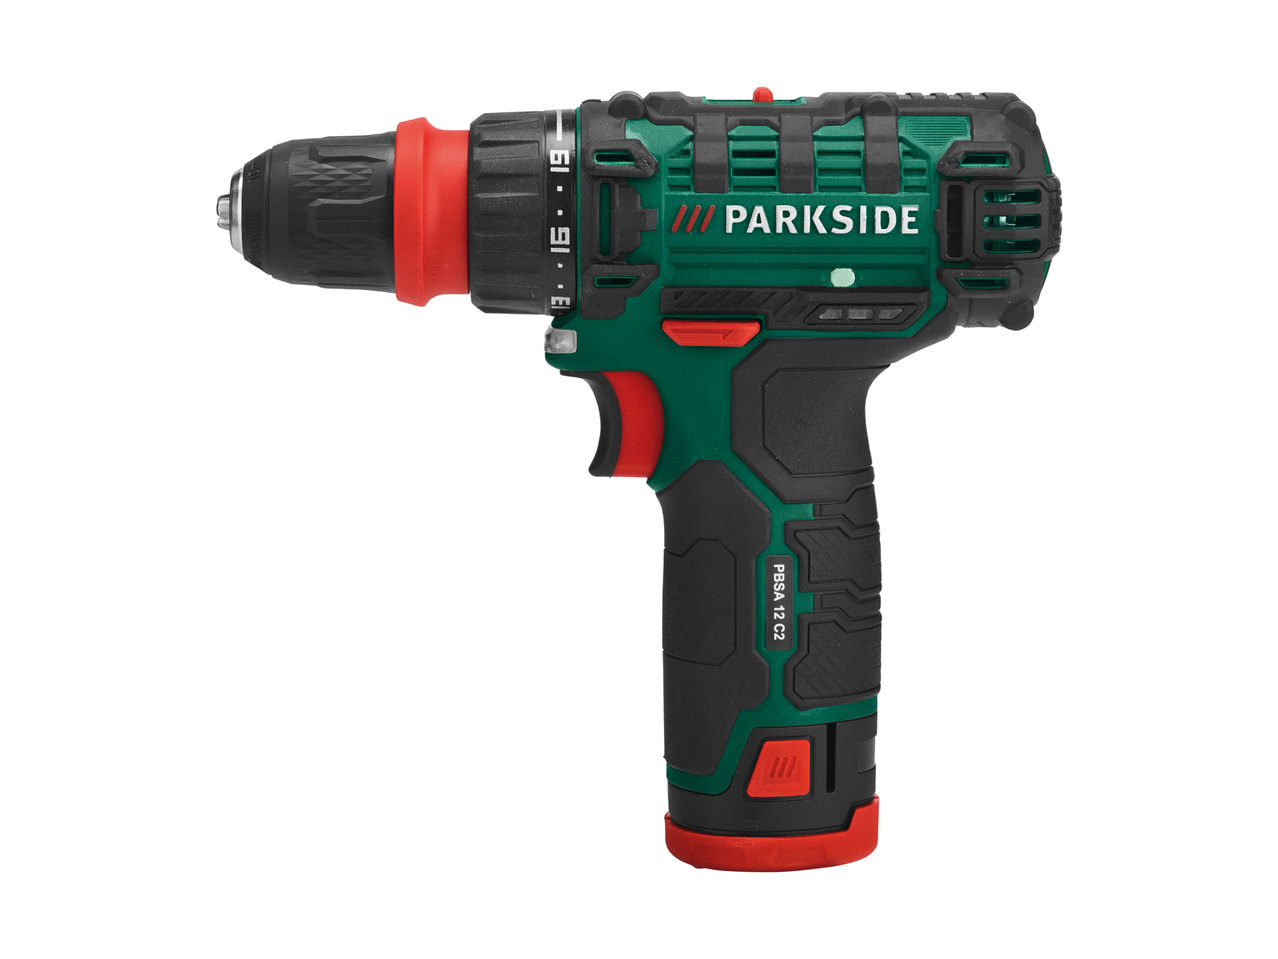 Parkside 12V Cordless Drill1